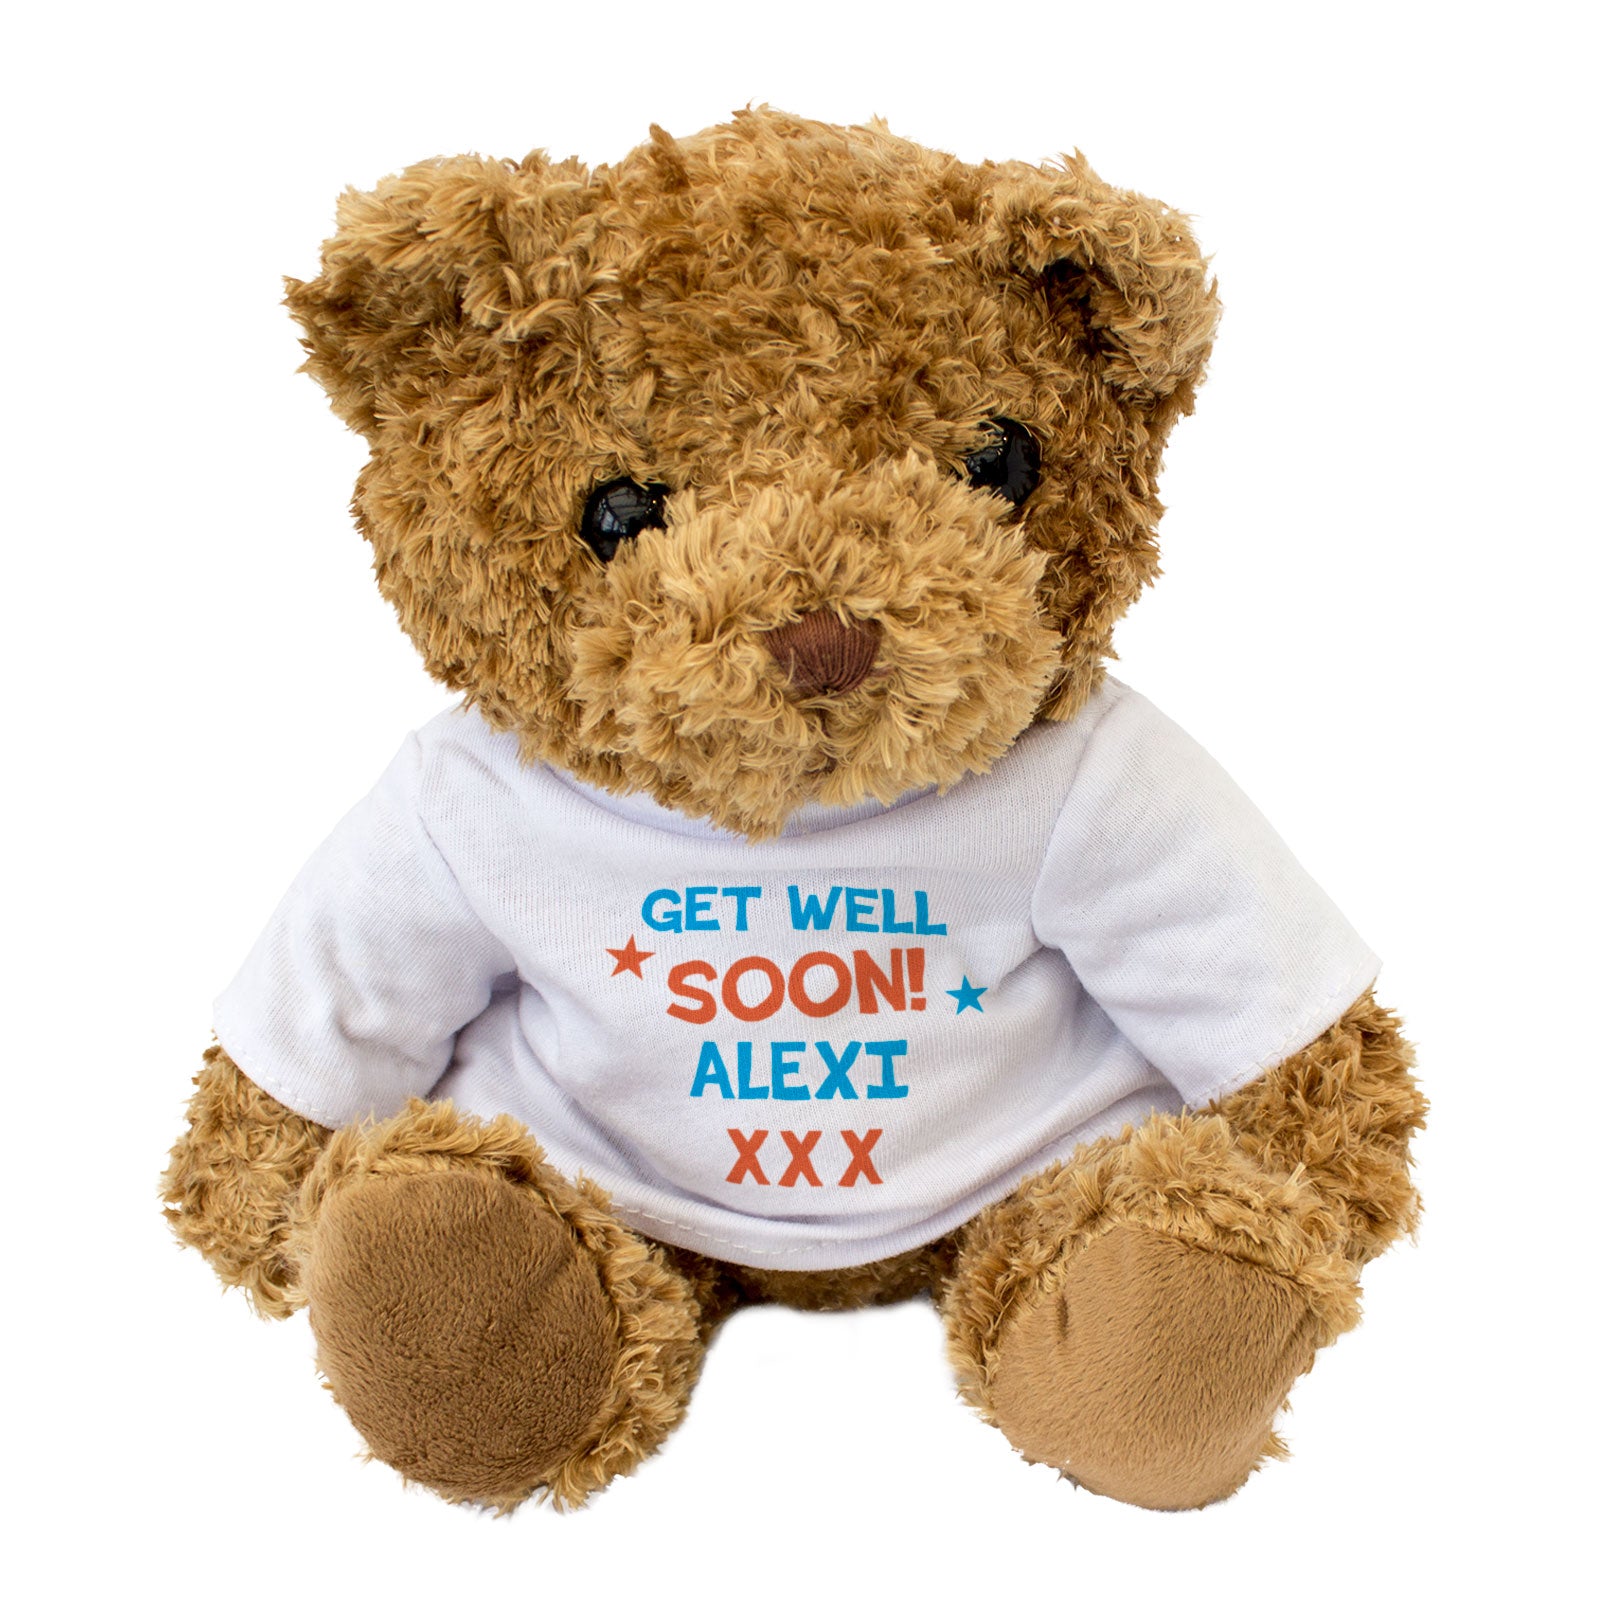 Get Well Soon Alexi - Teddy Bear